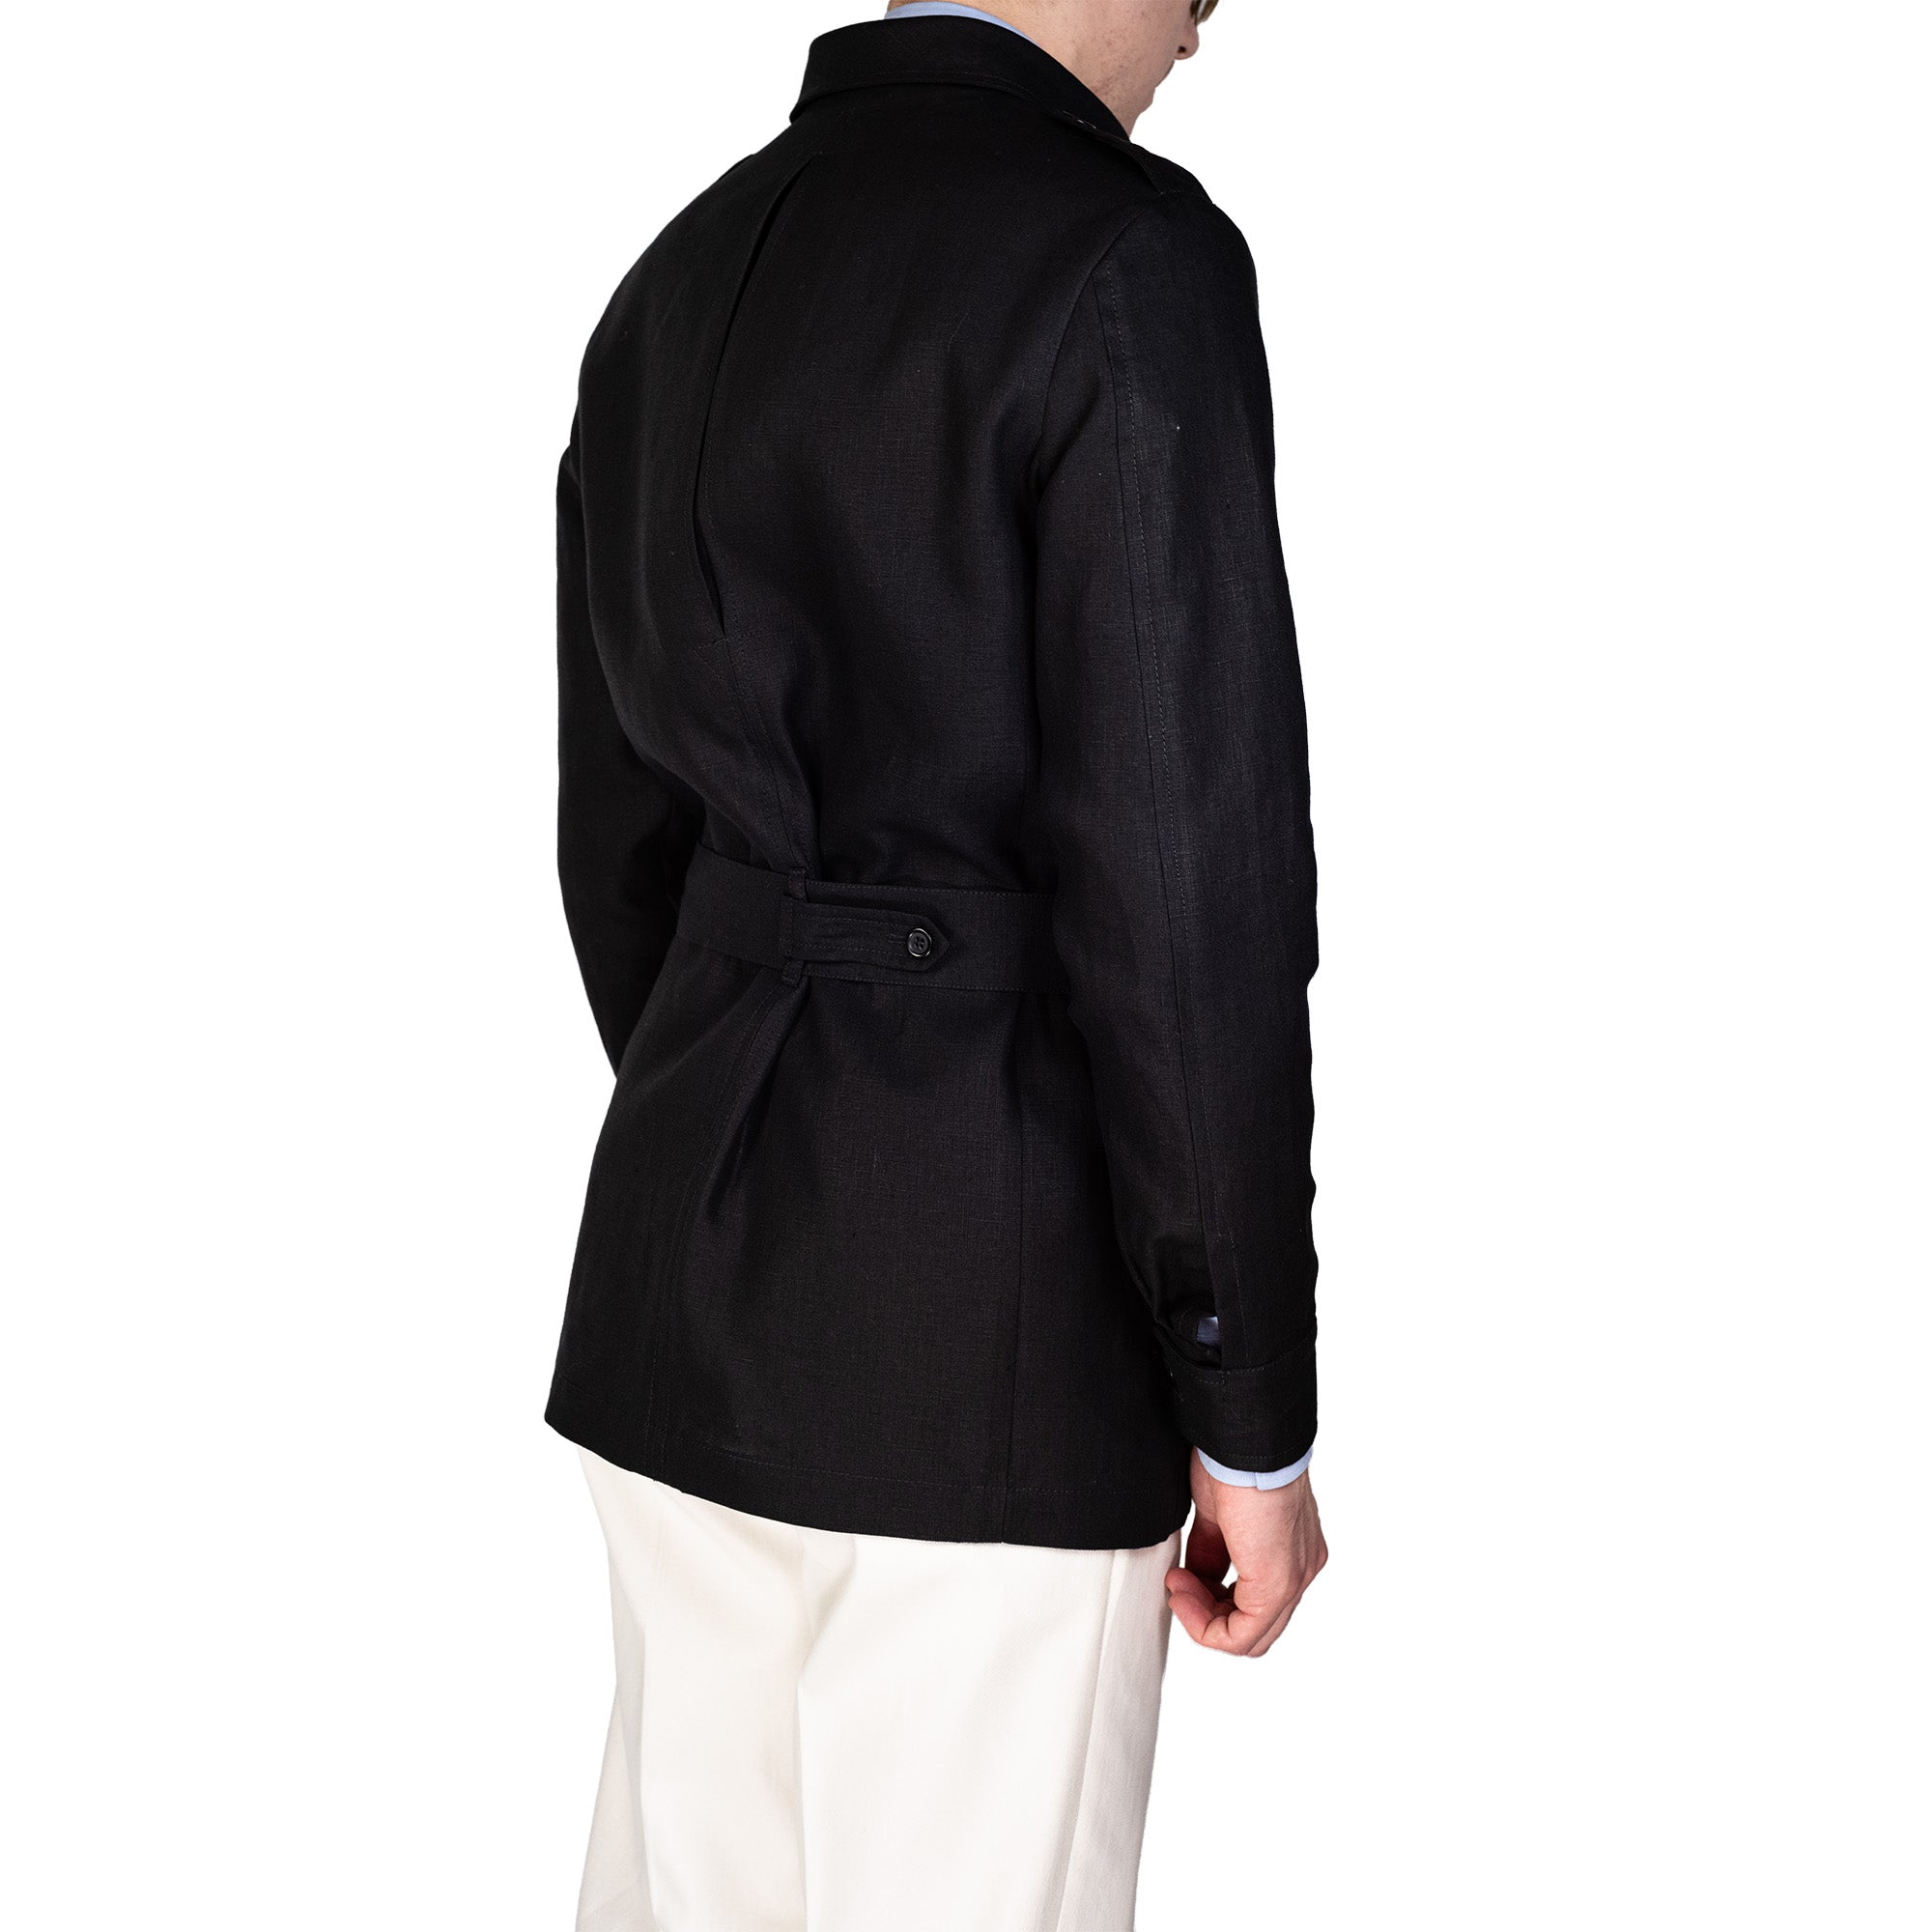 Safari jacket - Black linen